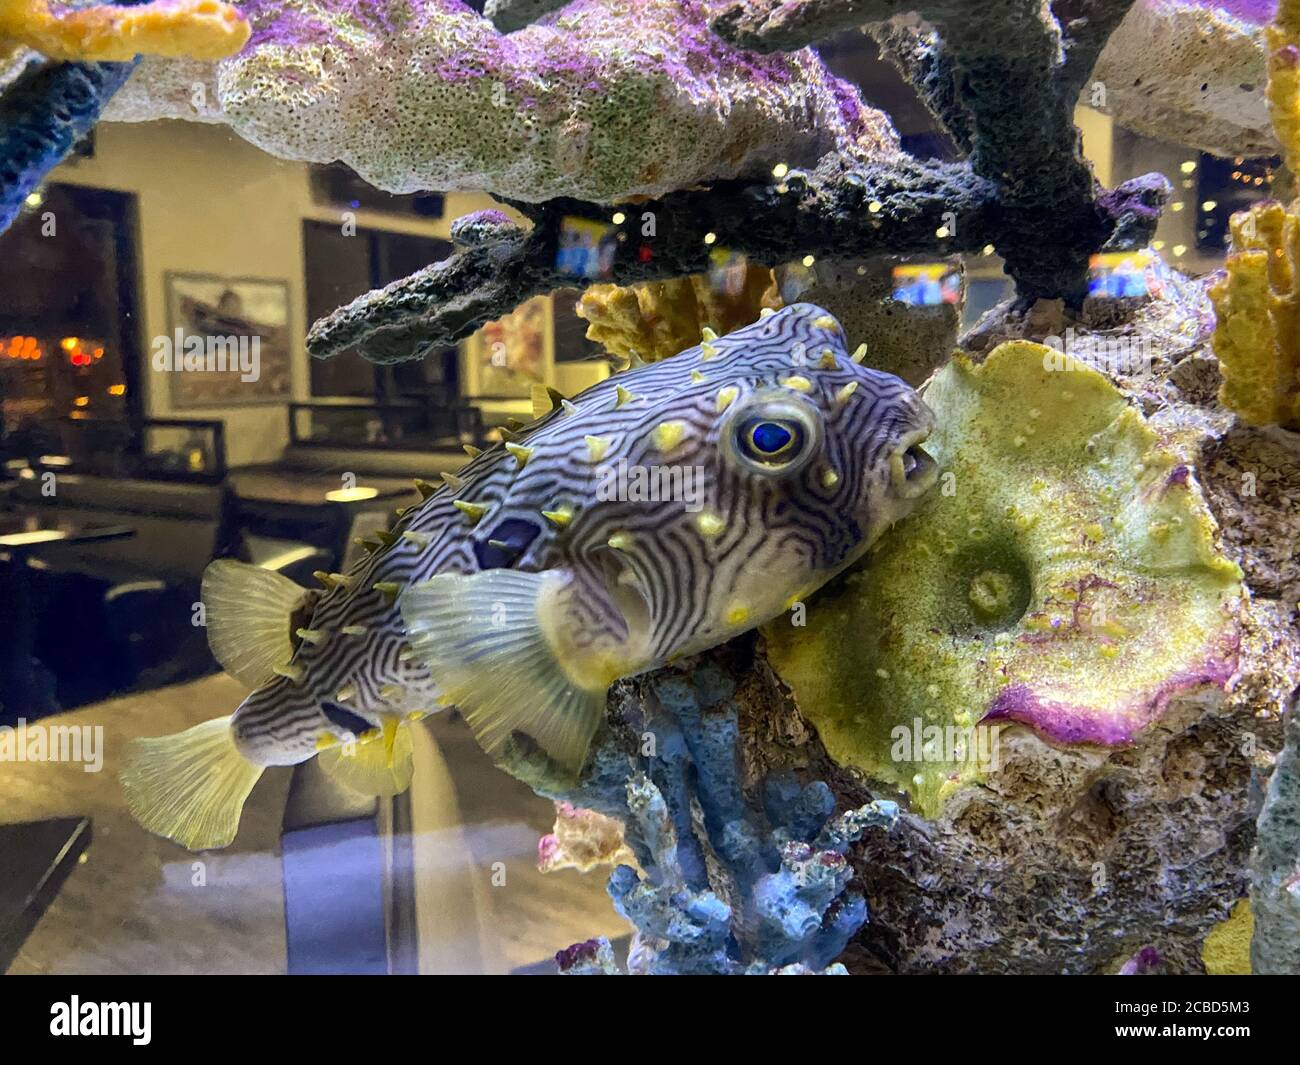 A Large Pufferfish inside an Aquarium at a Restaurant Stock Photo